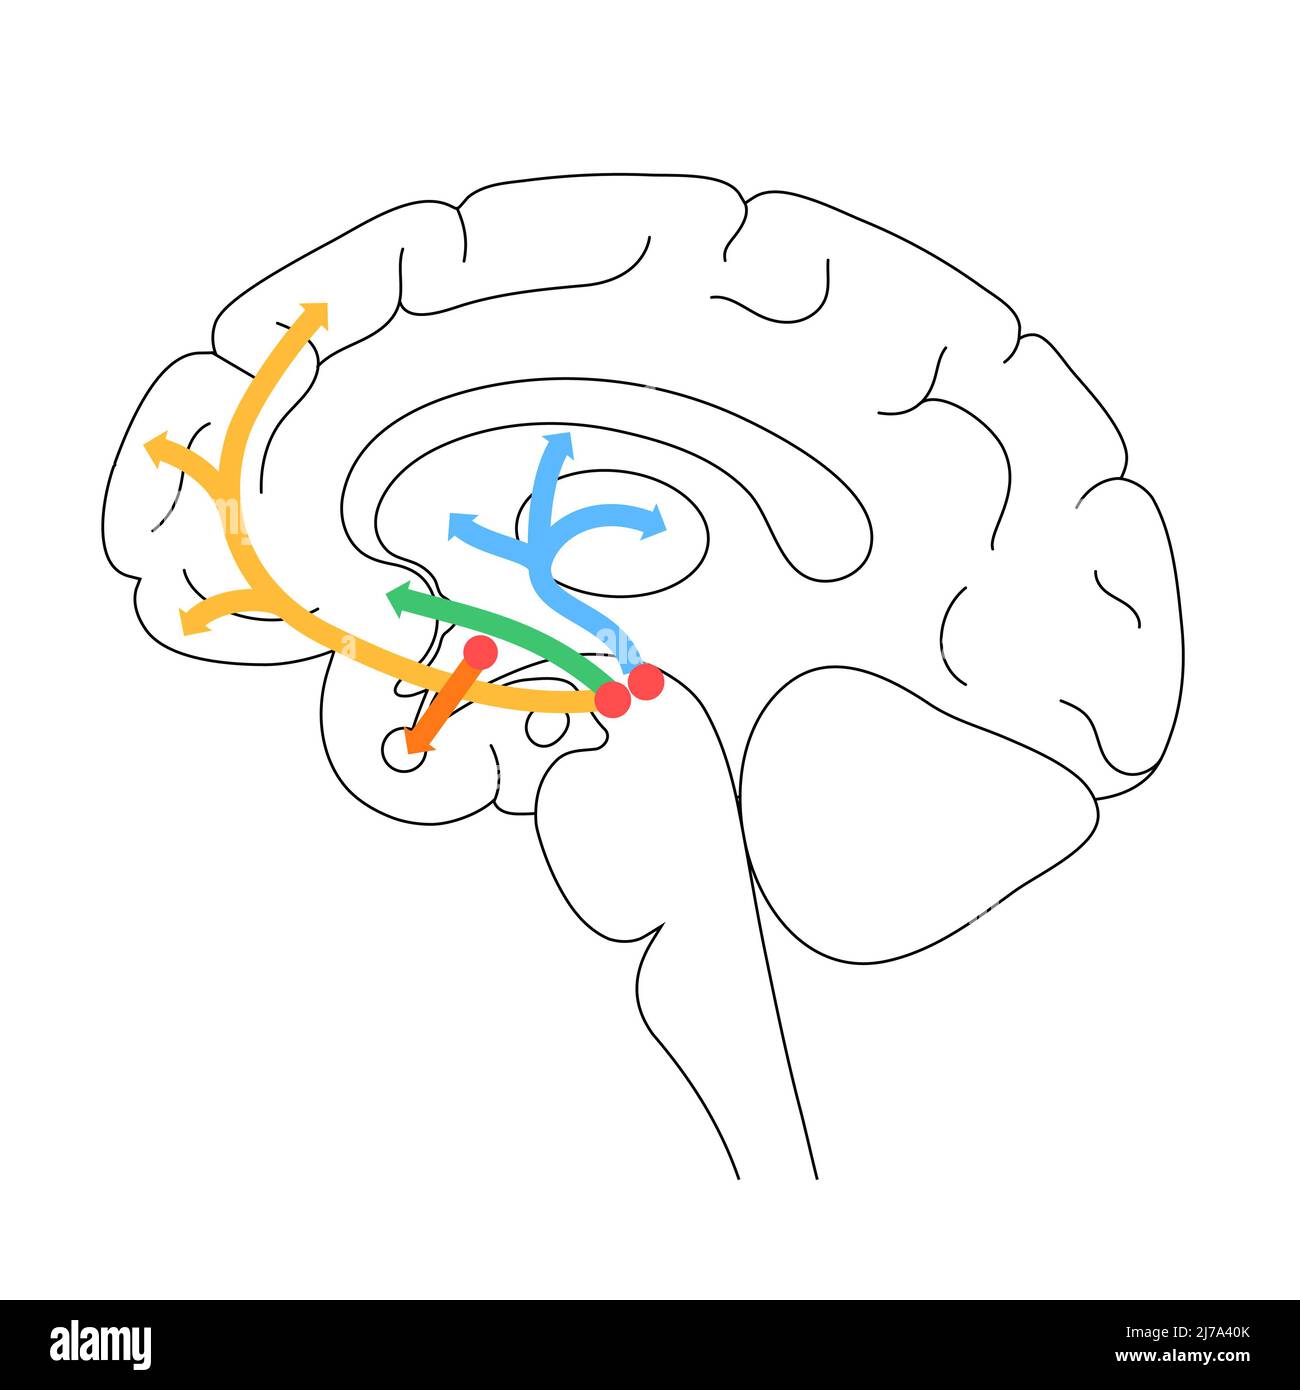 Dopamine pathway, illustration Stock Photo